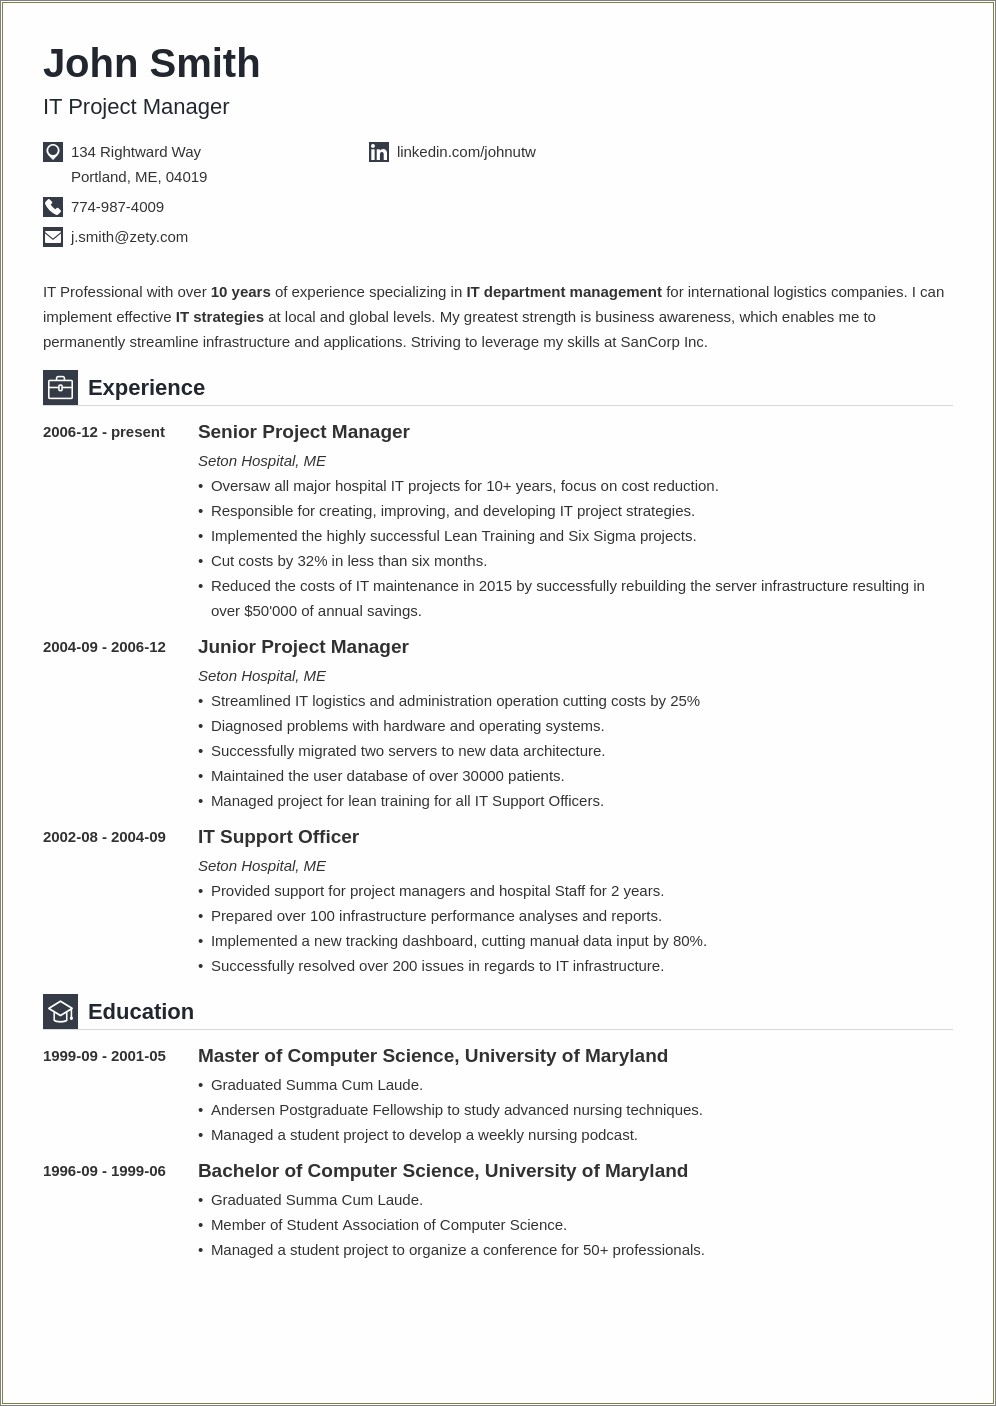 Best Resume Skills List Linkedin Jobs